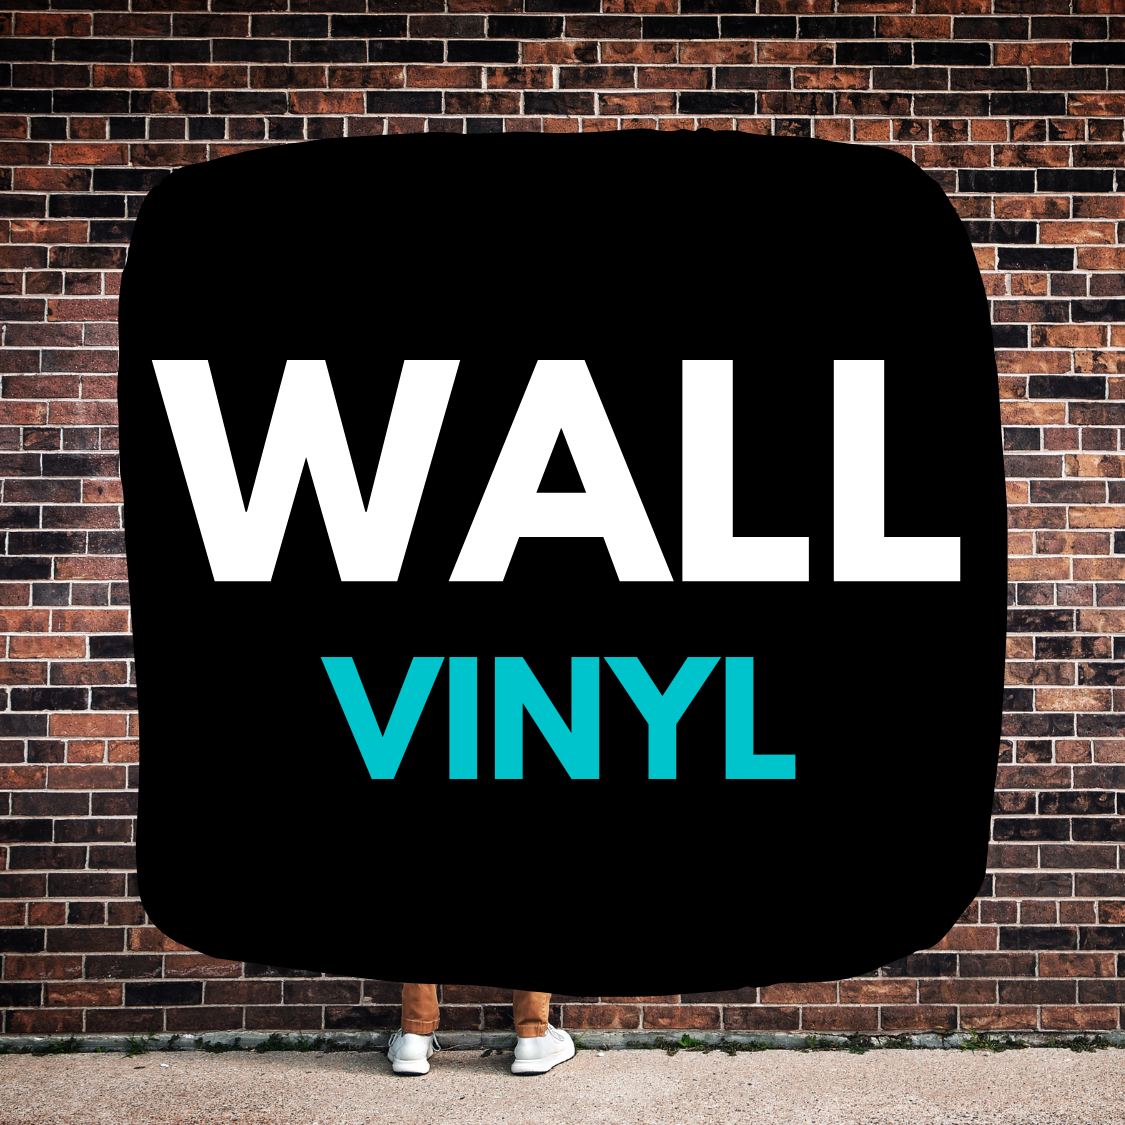 Wall Mural Vinyl